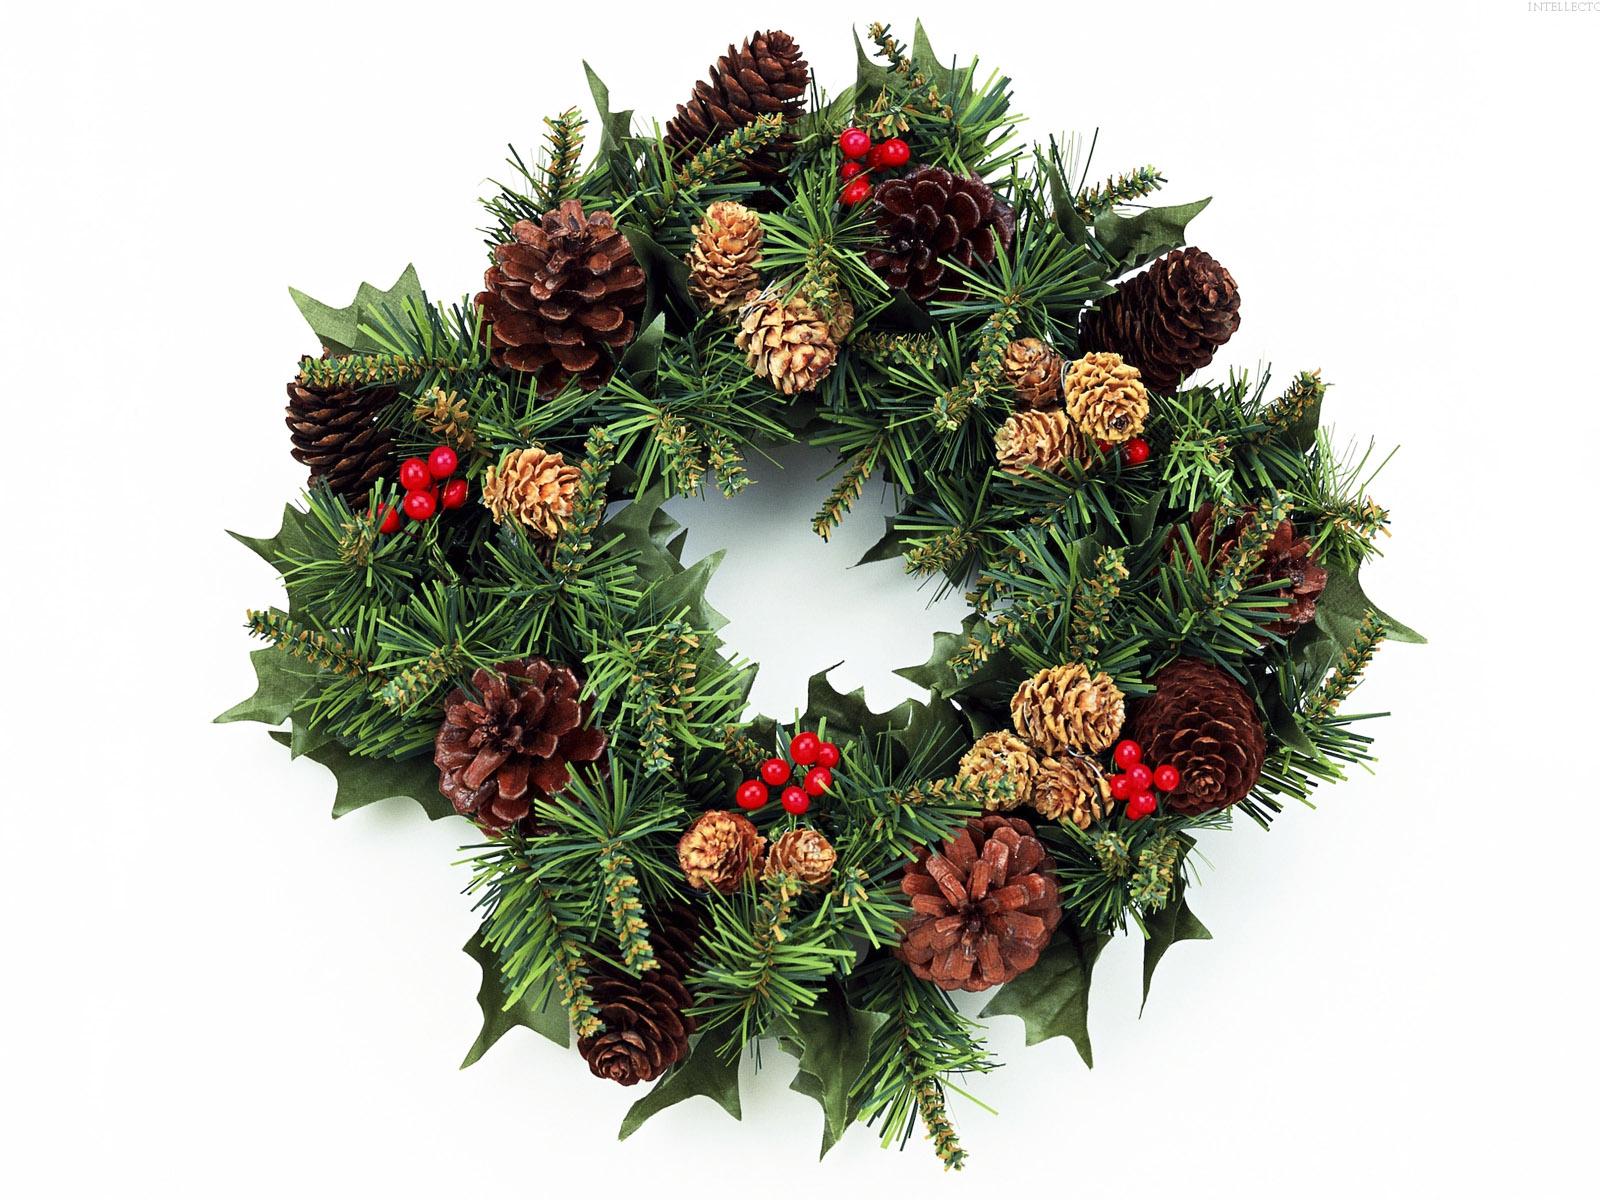 Christmas Wreaths Wallpaper - Wallpaper, High Definition, High Quality